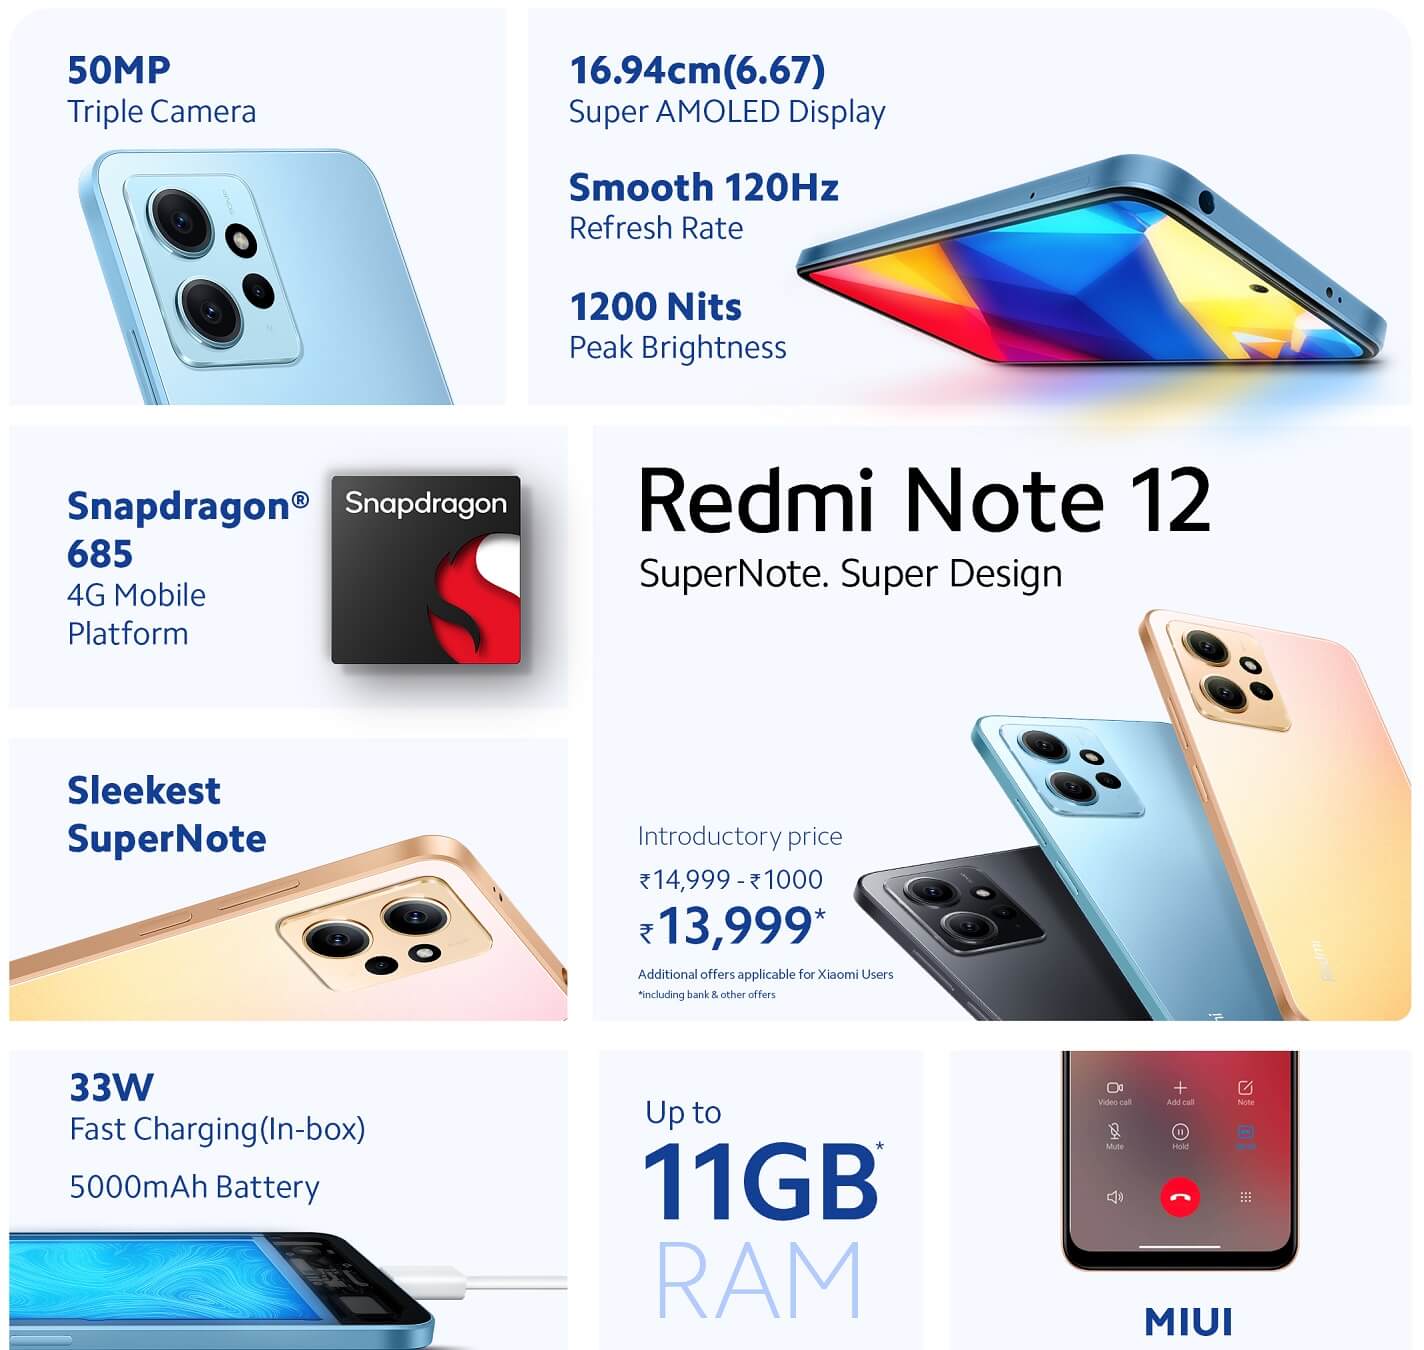 Rdmi Note 12 features India